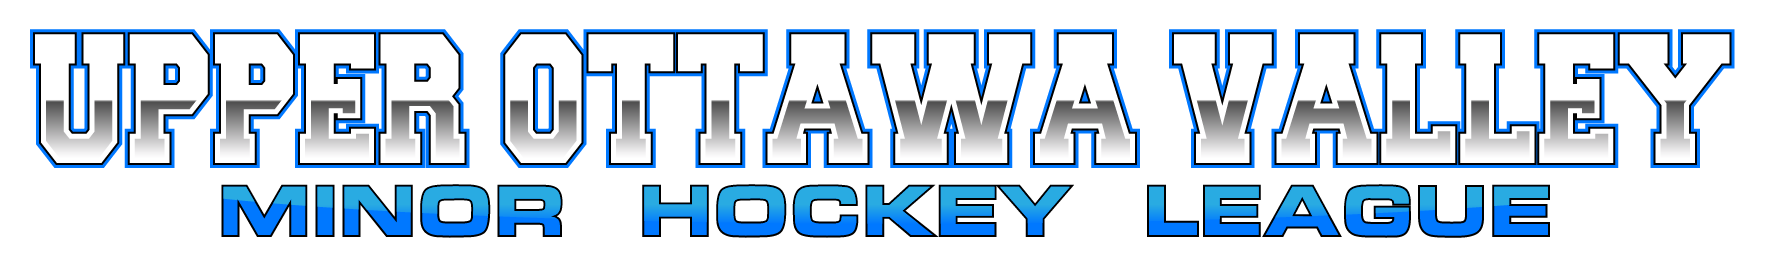 Upper Ottawa Valley Minor Hockey League - D5